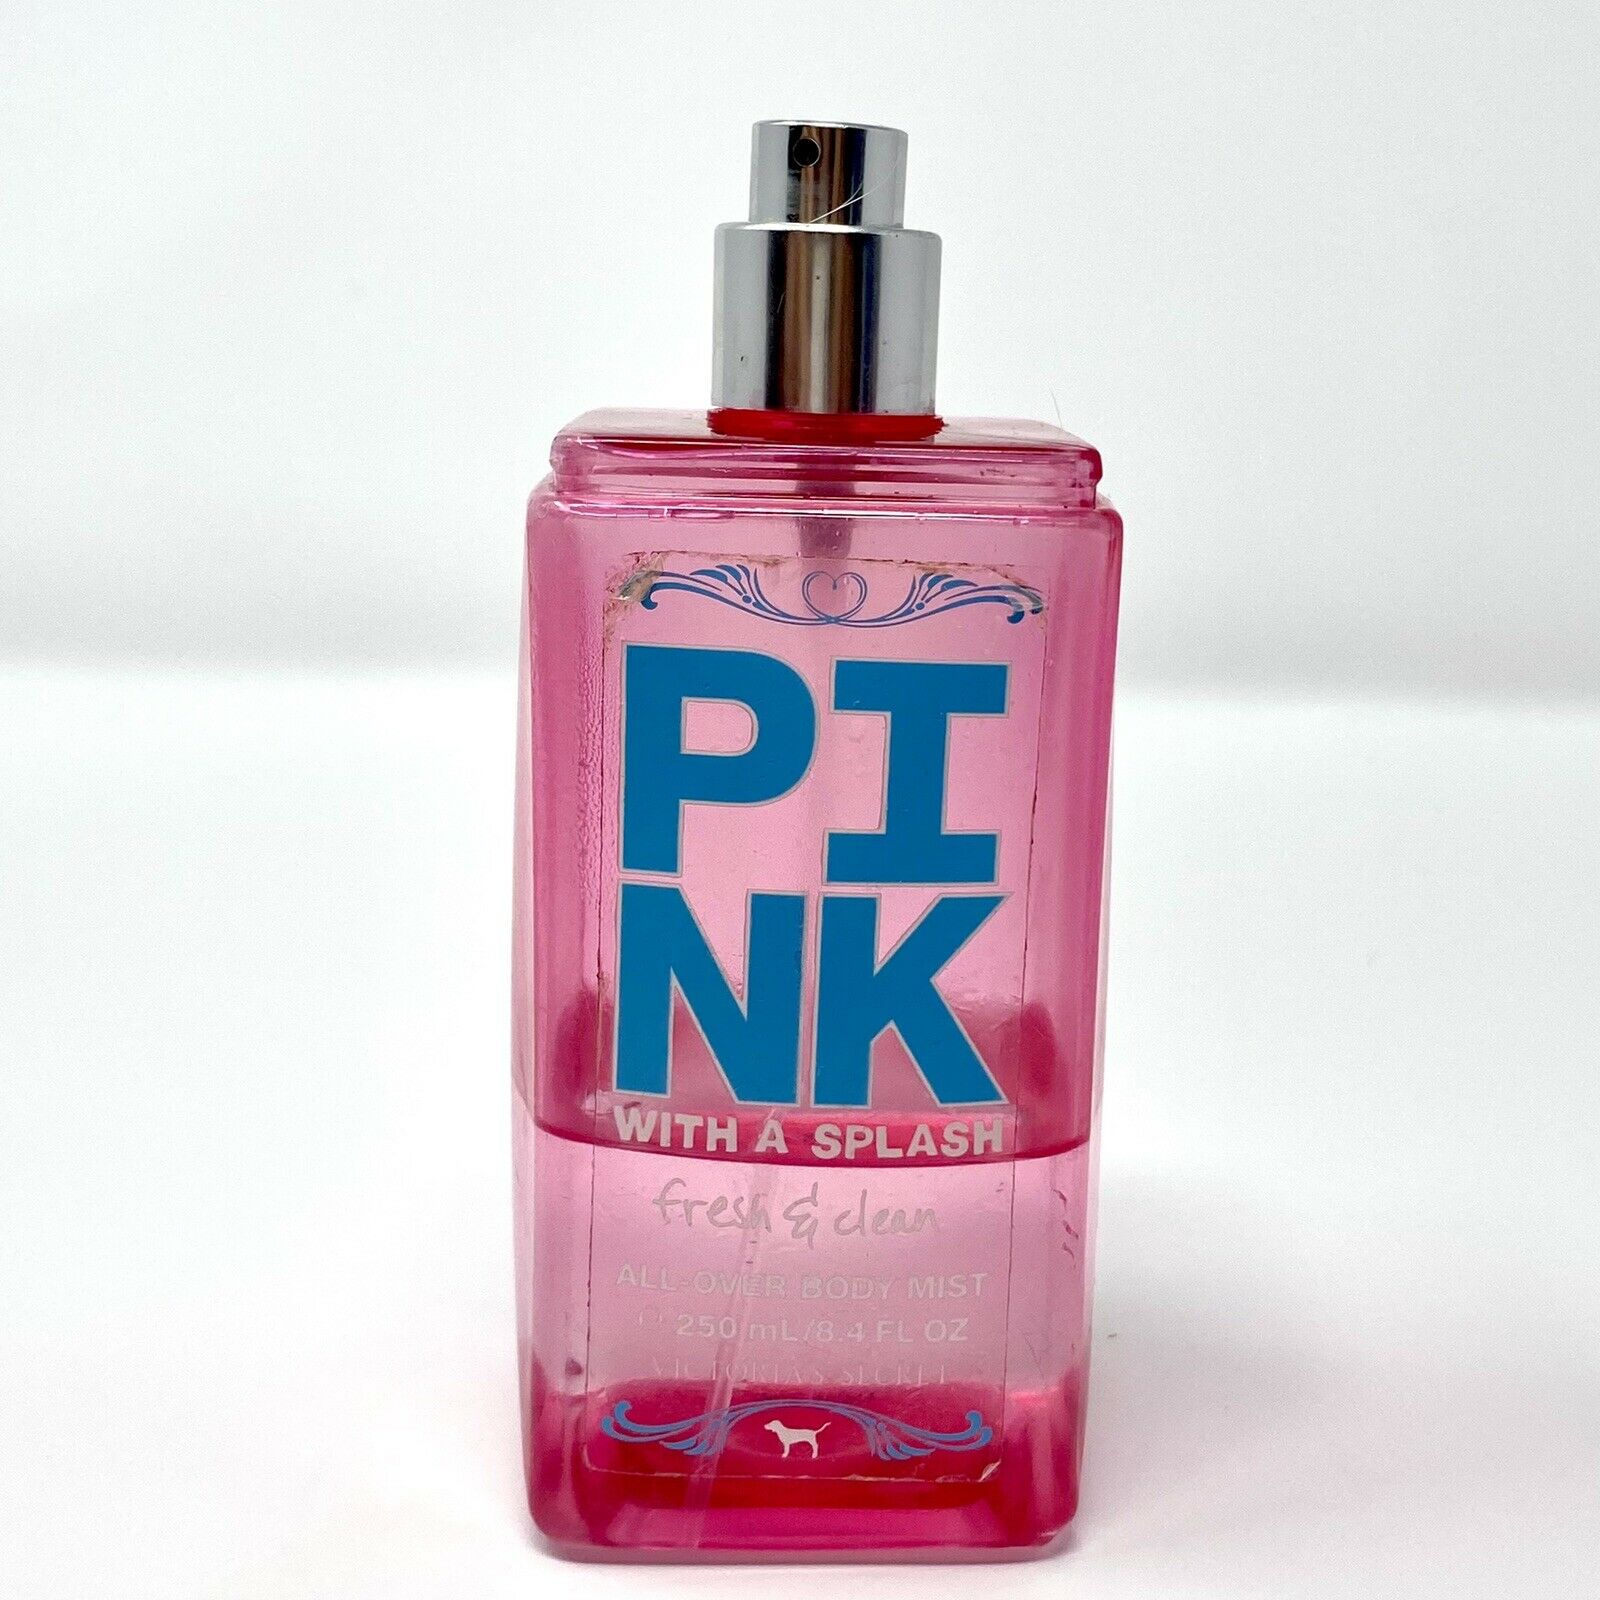 PINK with a splash fresh & clean body mist Victoria Secret 4.2 oz 40% FULL